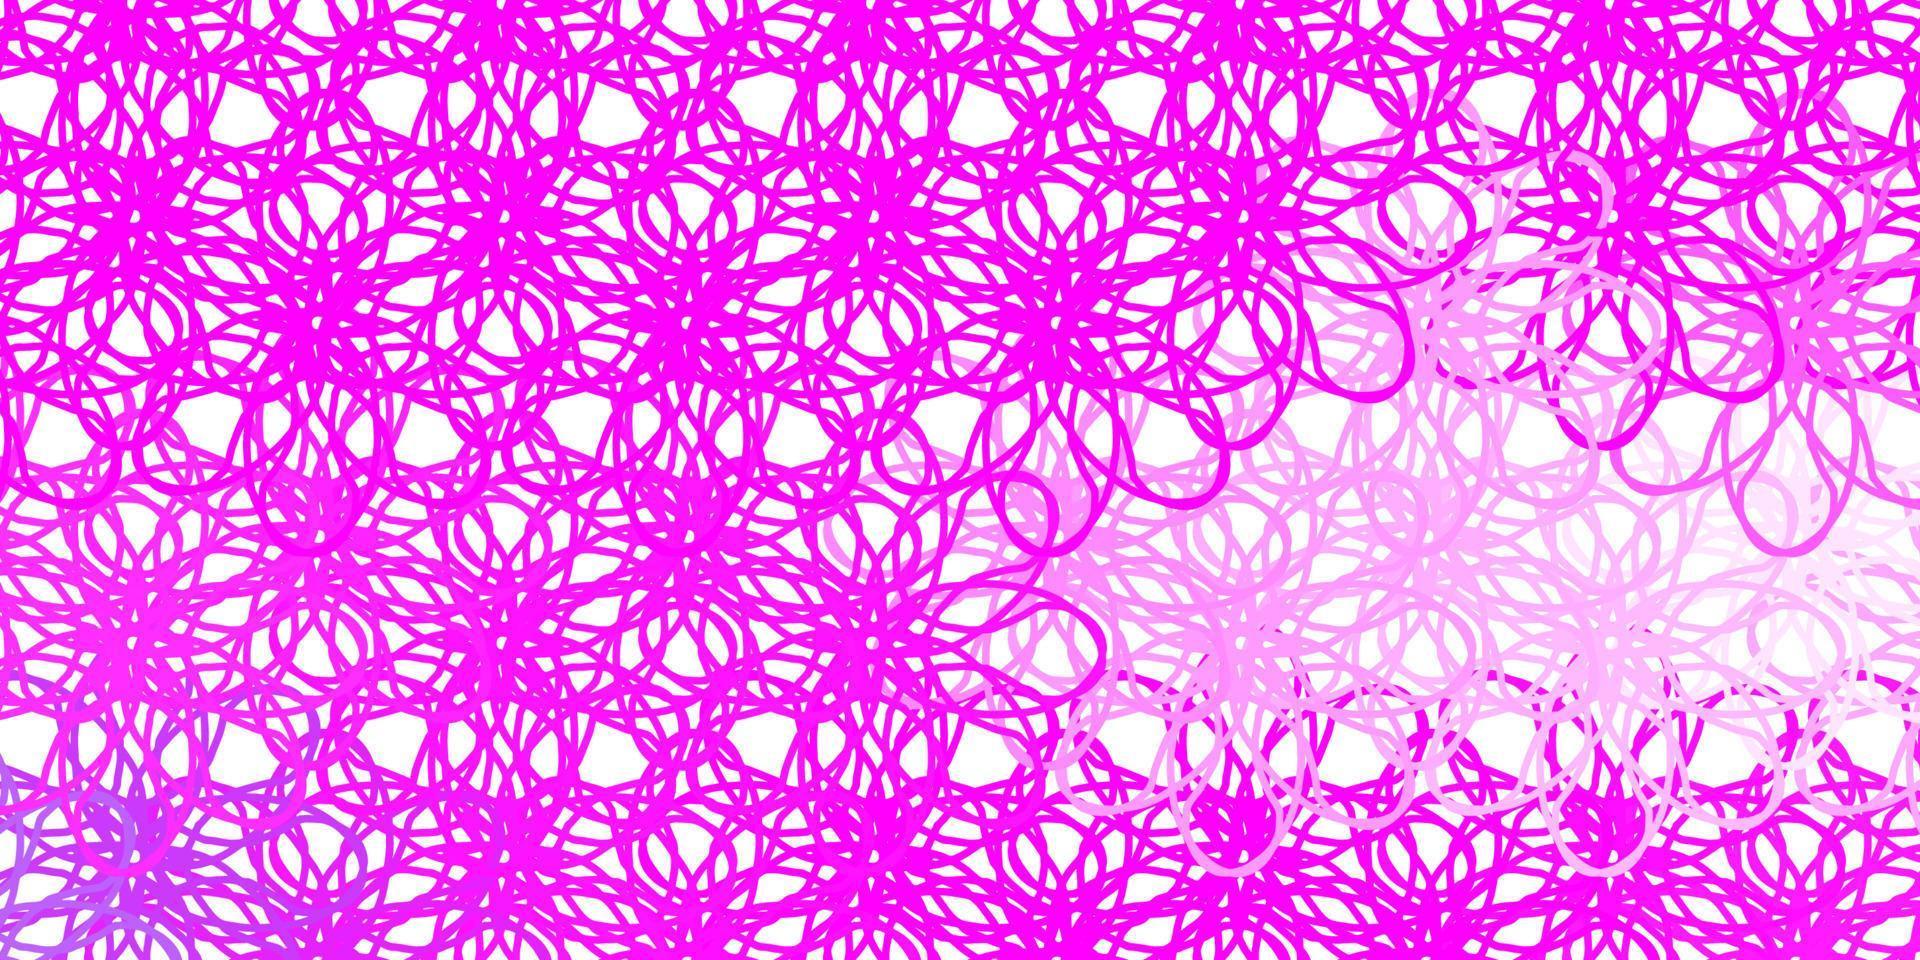 lichtpaarse, roze vectorlay-out met curven. vector